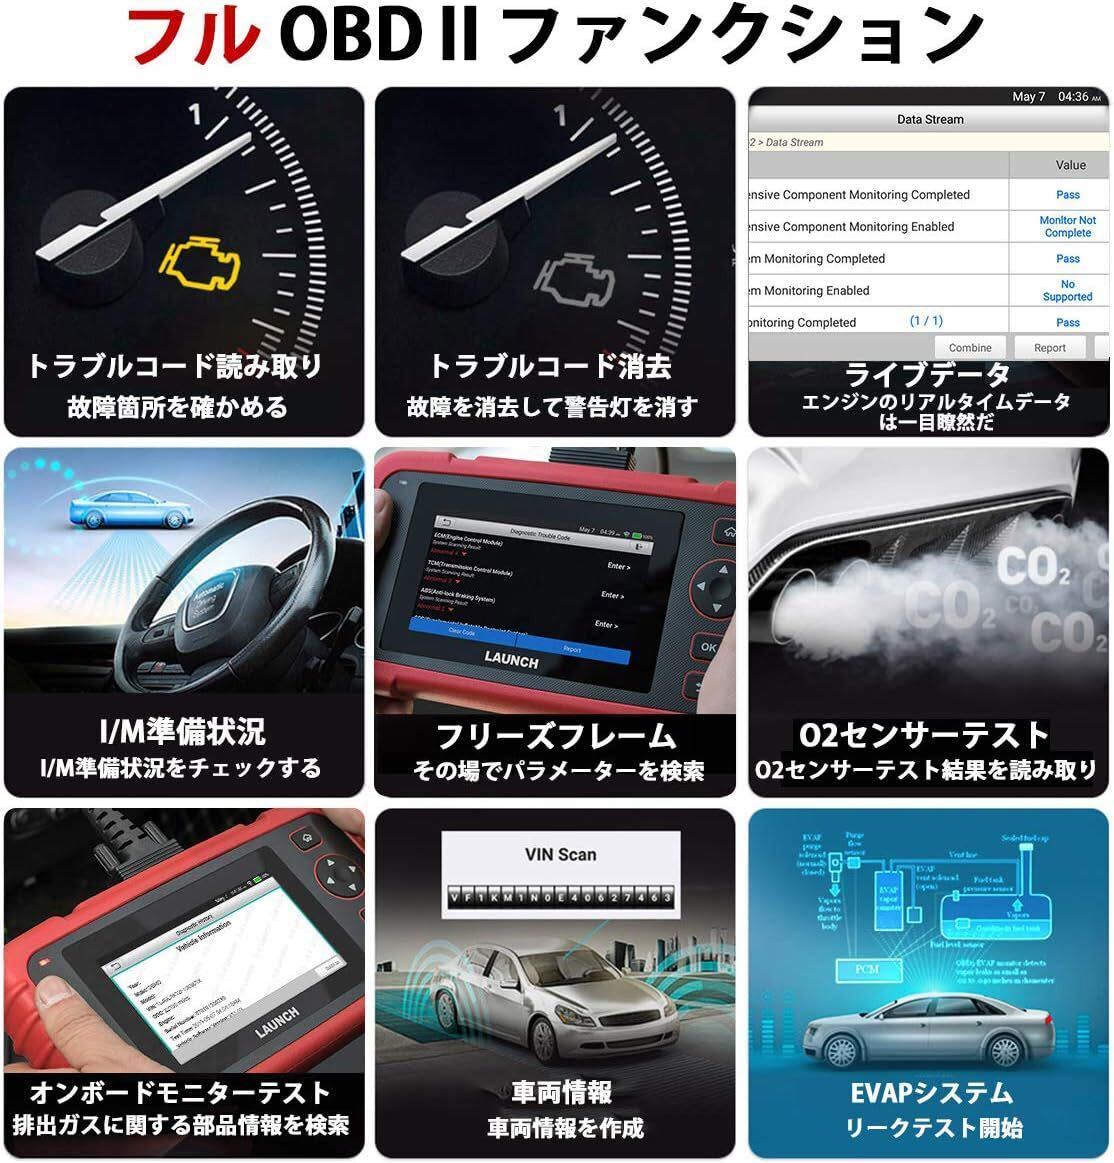 OBD2 診断機 故障診断機 日本語対応 自動車エンジントランスミッション 輸入車 ABS SRS4システム診断 スキャンツールAutoVin ホンダ_画像4